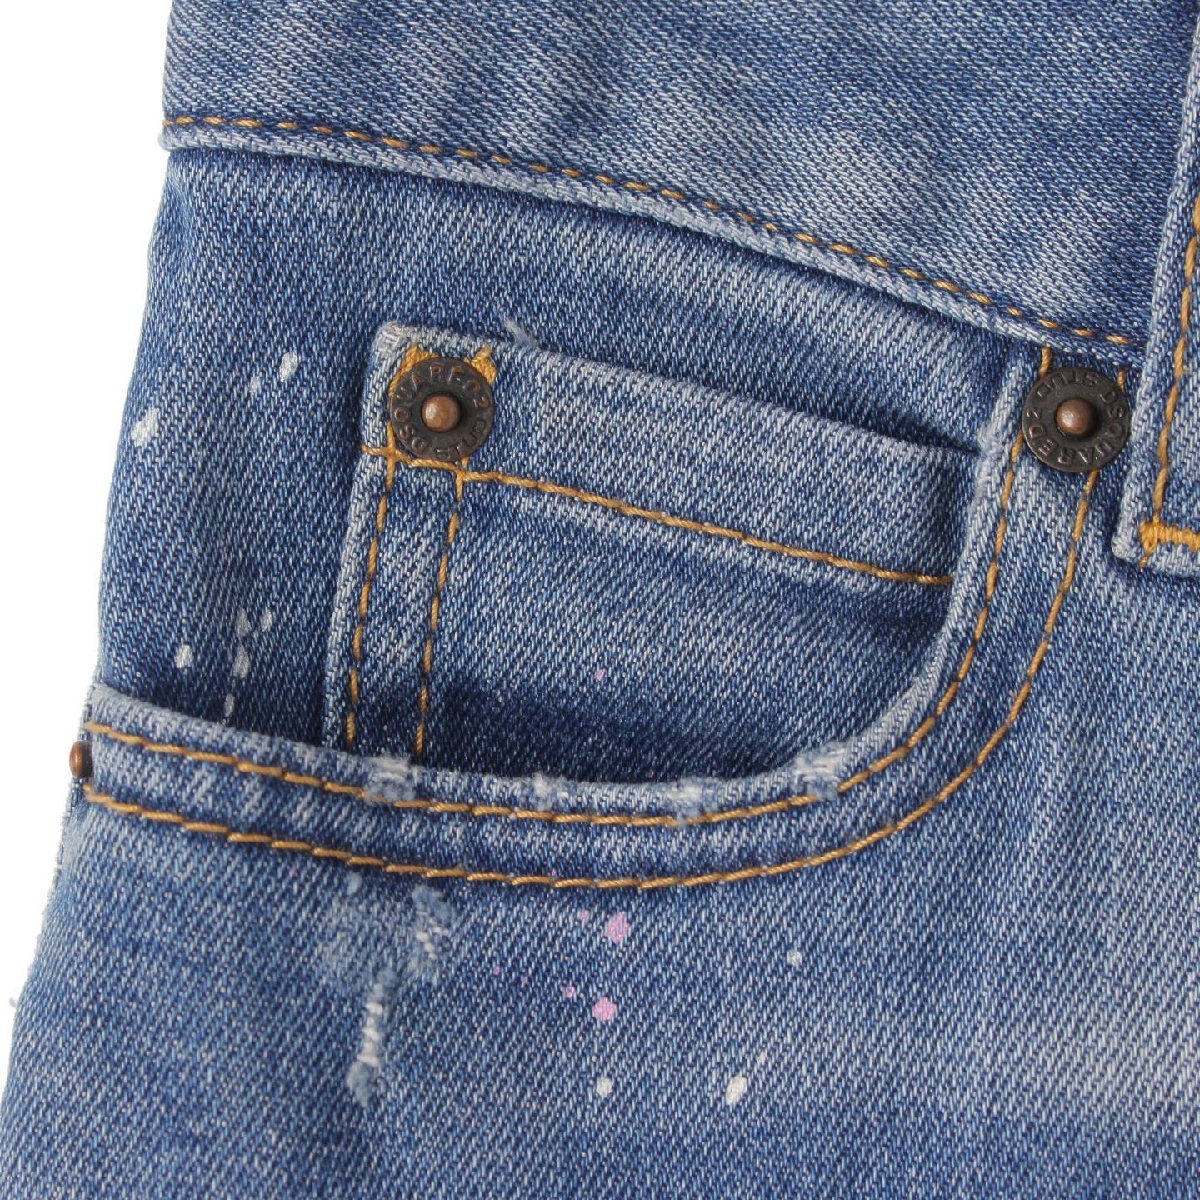 [ Dsquared ]Dsquared2 22SS лента краска укороченные брюки Denim джинсы S75LB0613 голубой 36 [ б/у ]187607